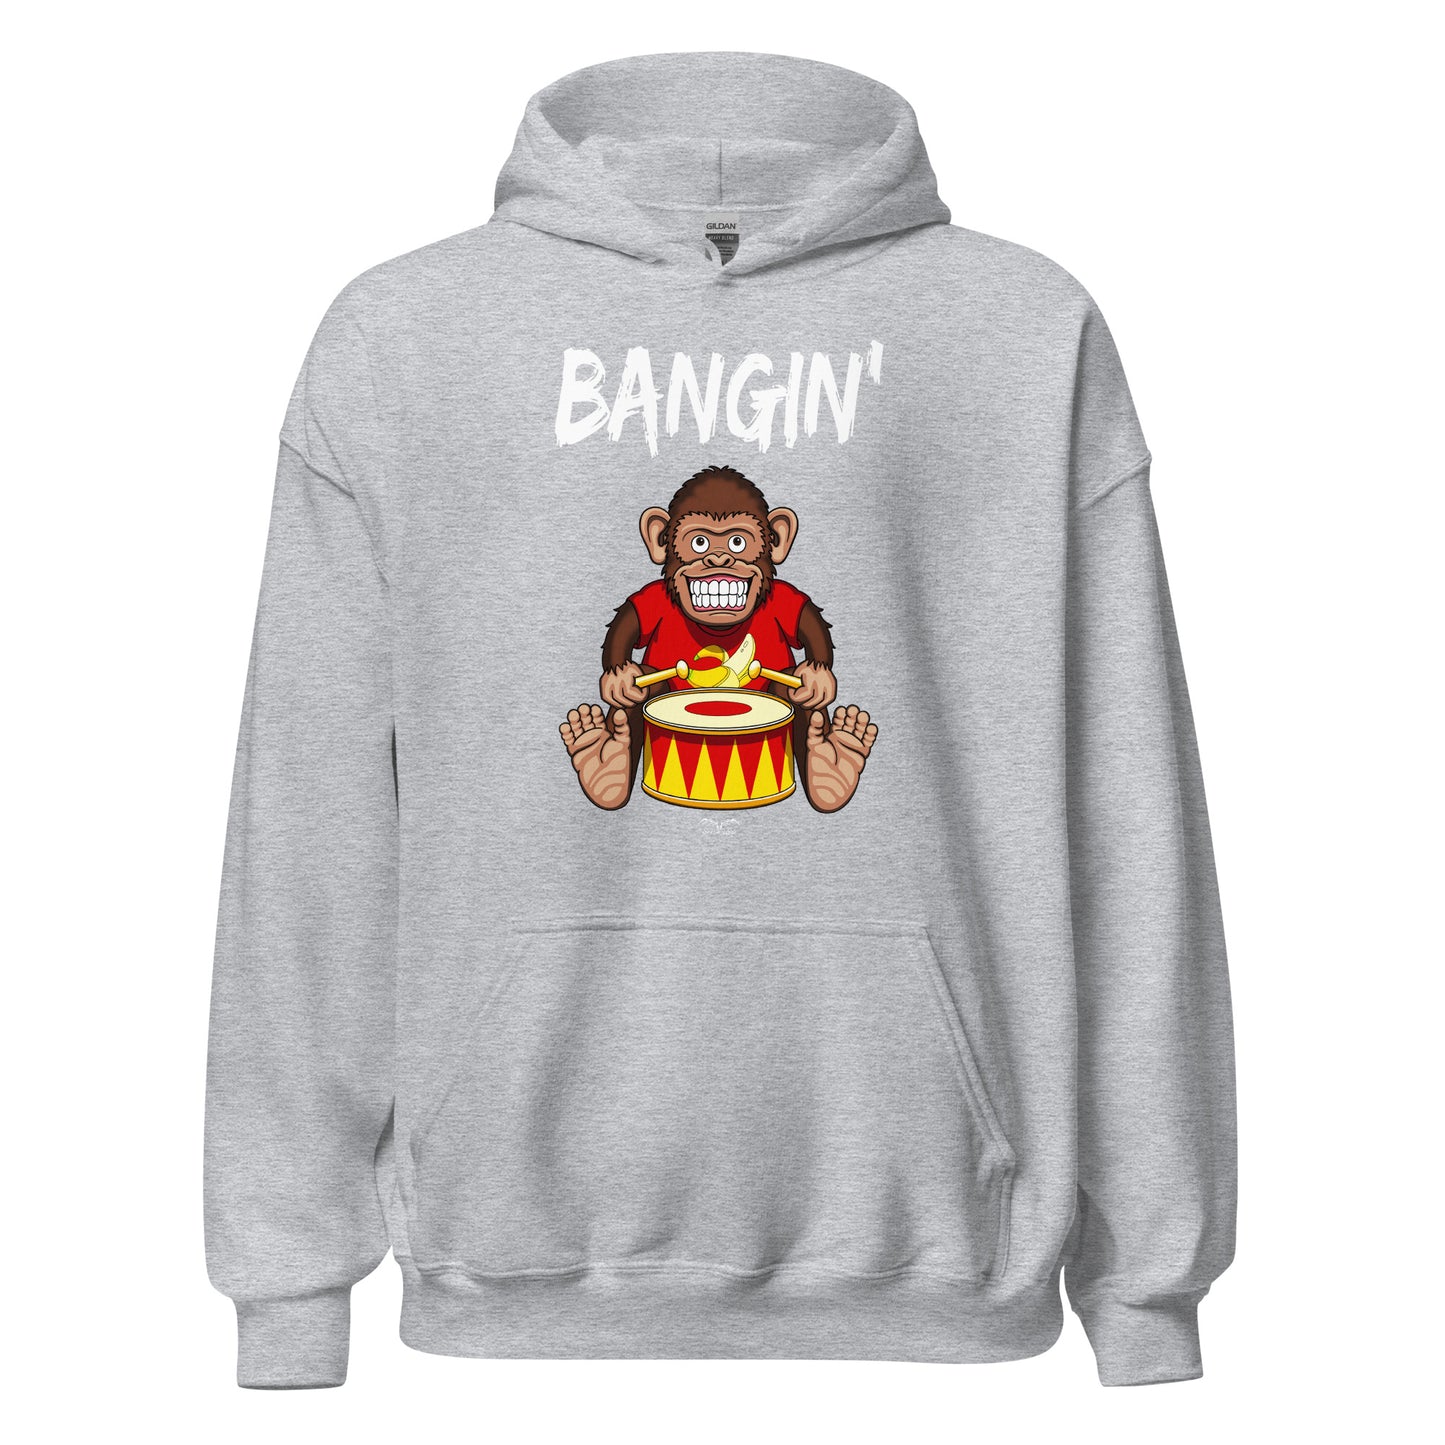 Bangin drummer monkey hoodie, light grey, by Stormseye Design